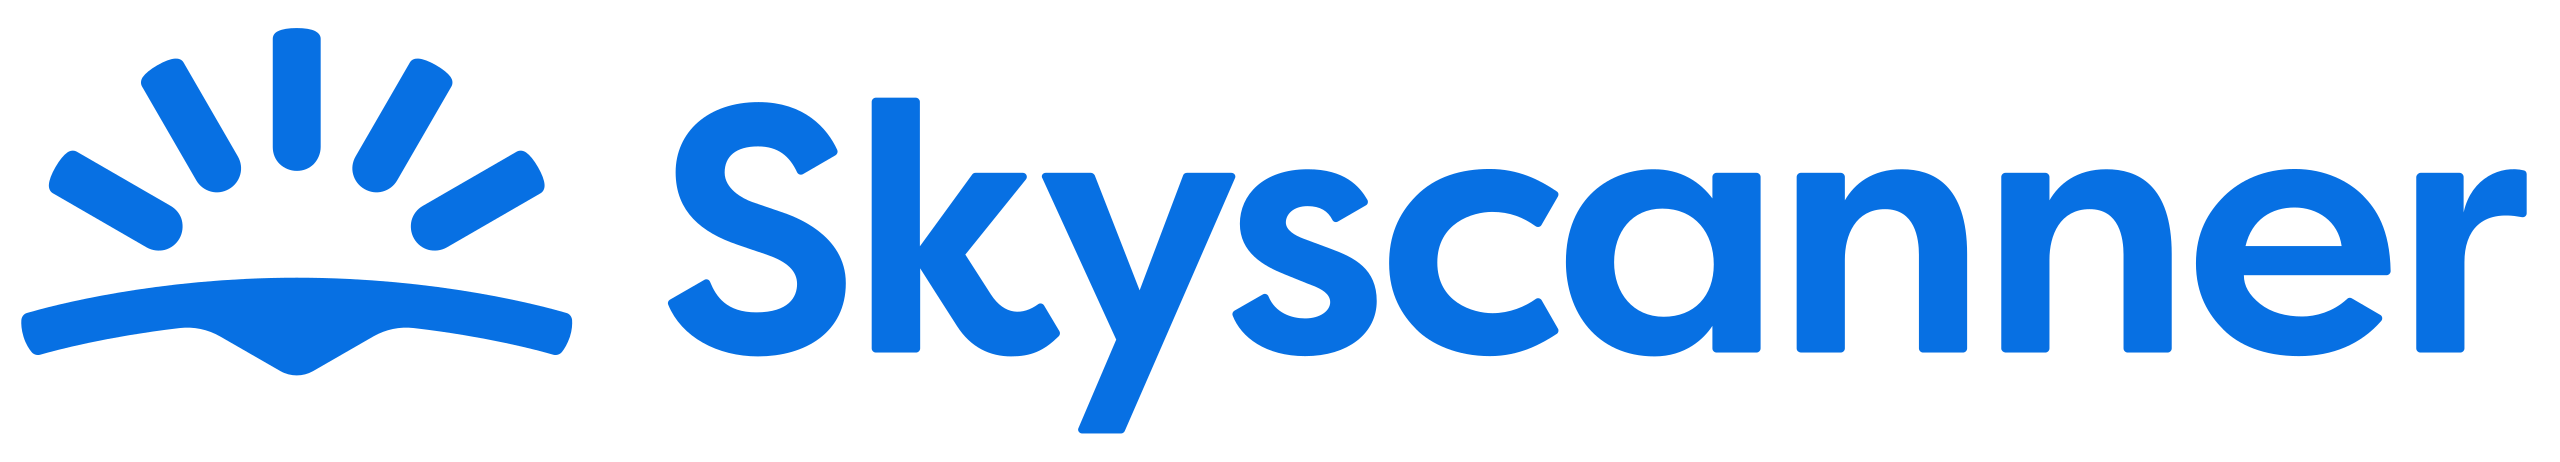 file:skyscanner logo lockuphorizontal skyblue rgb.svg - wikimedia commons